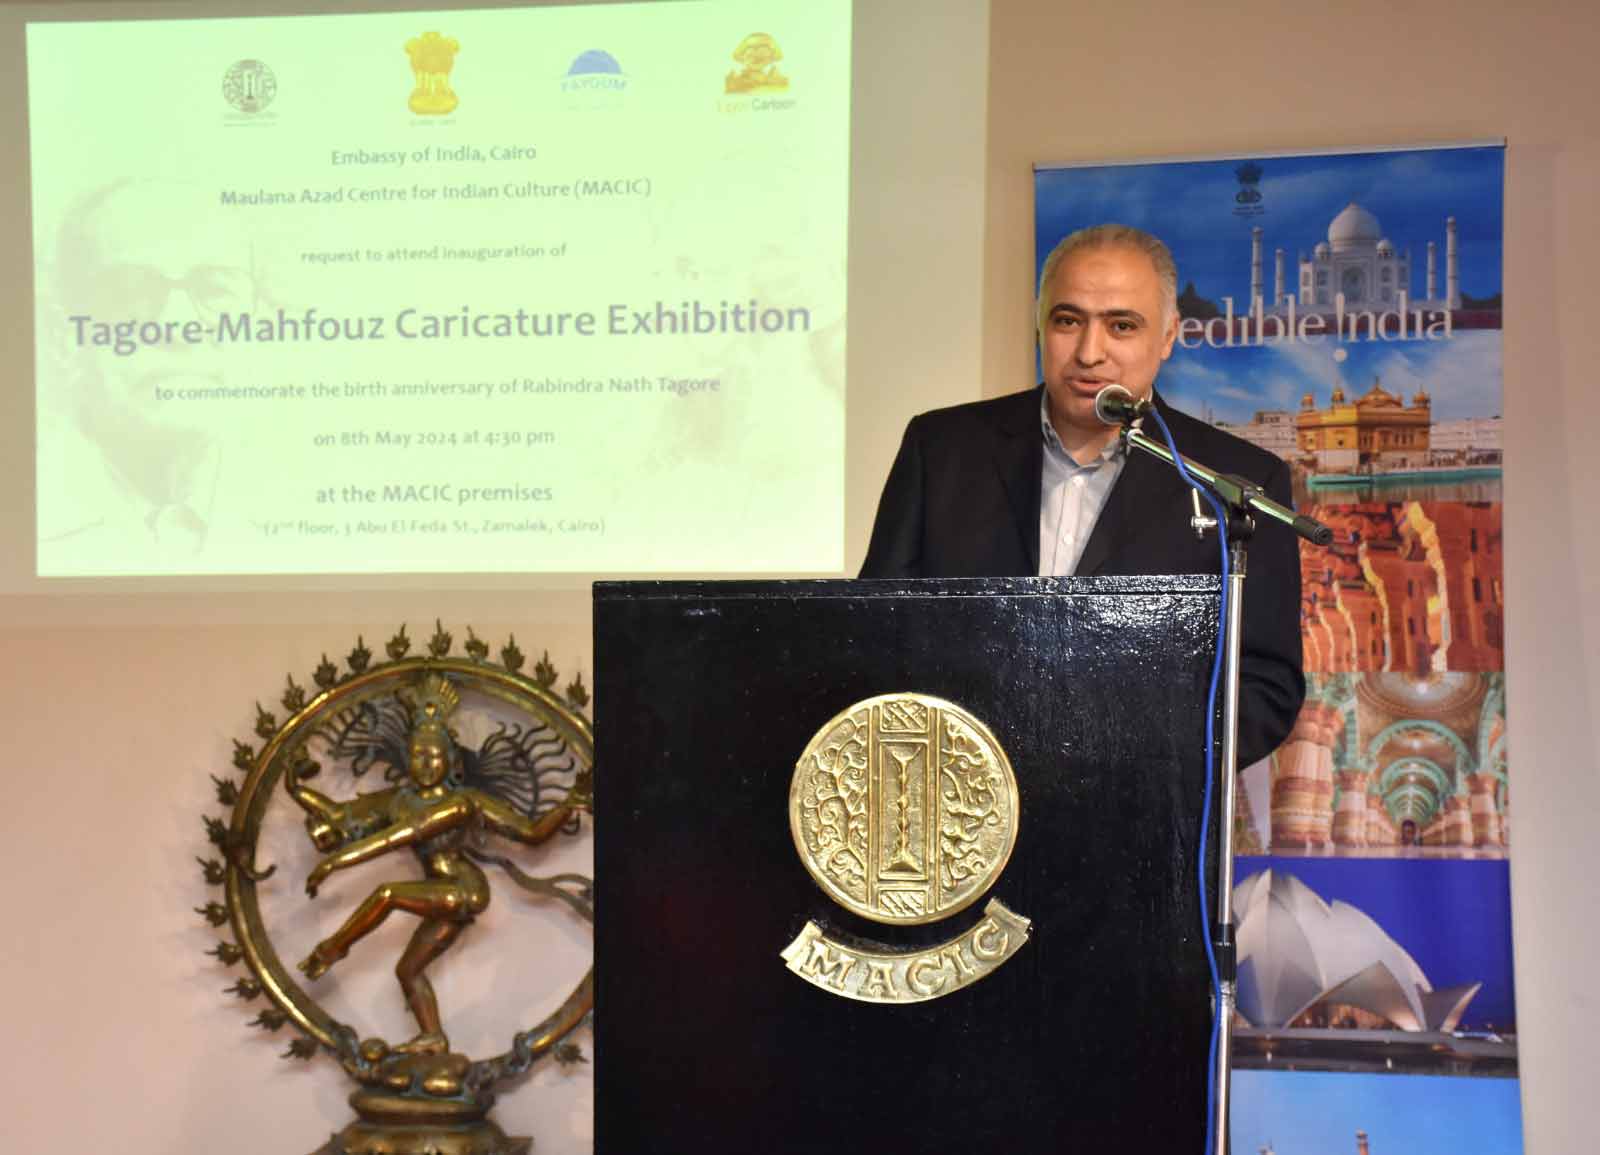 Indian Ambassador to Cairo inaugurates "Tagore and Mahfouz Caricature" Exhibition